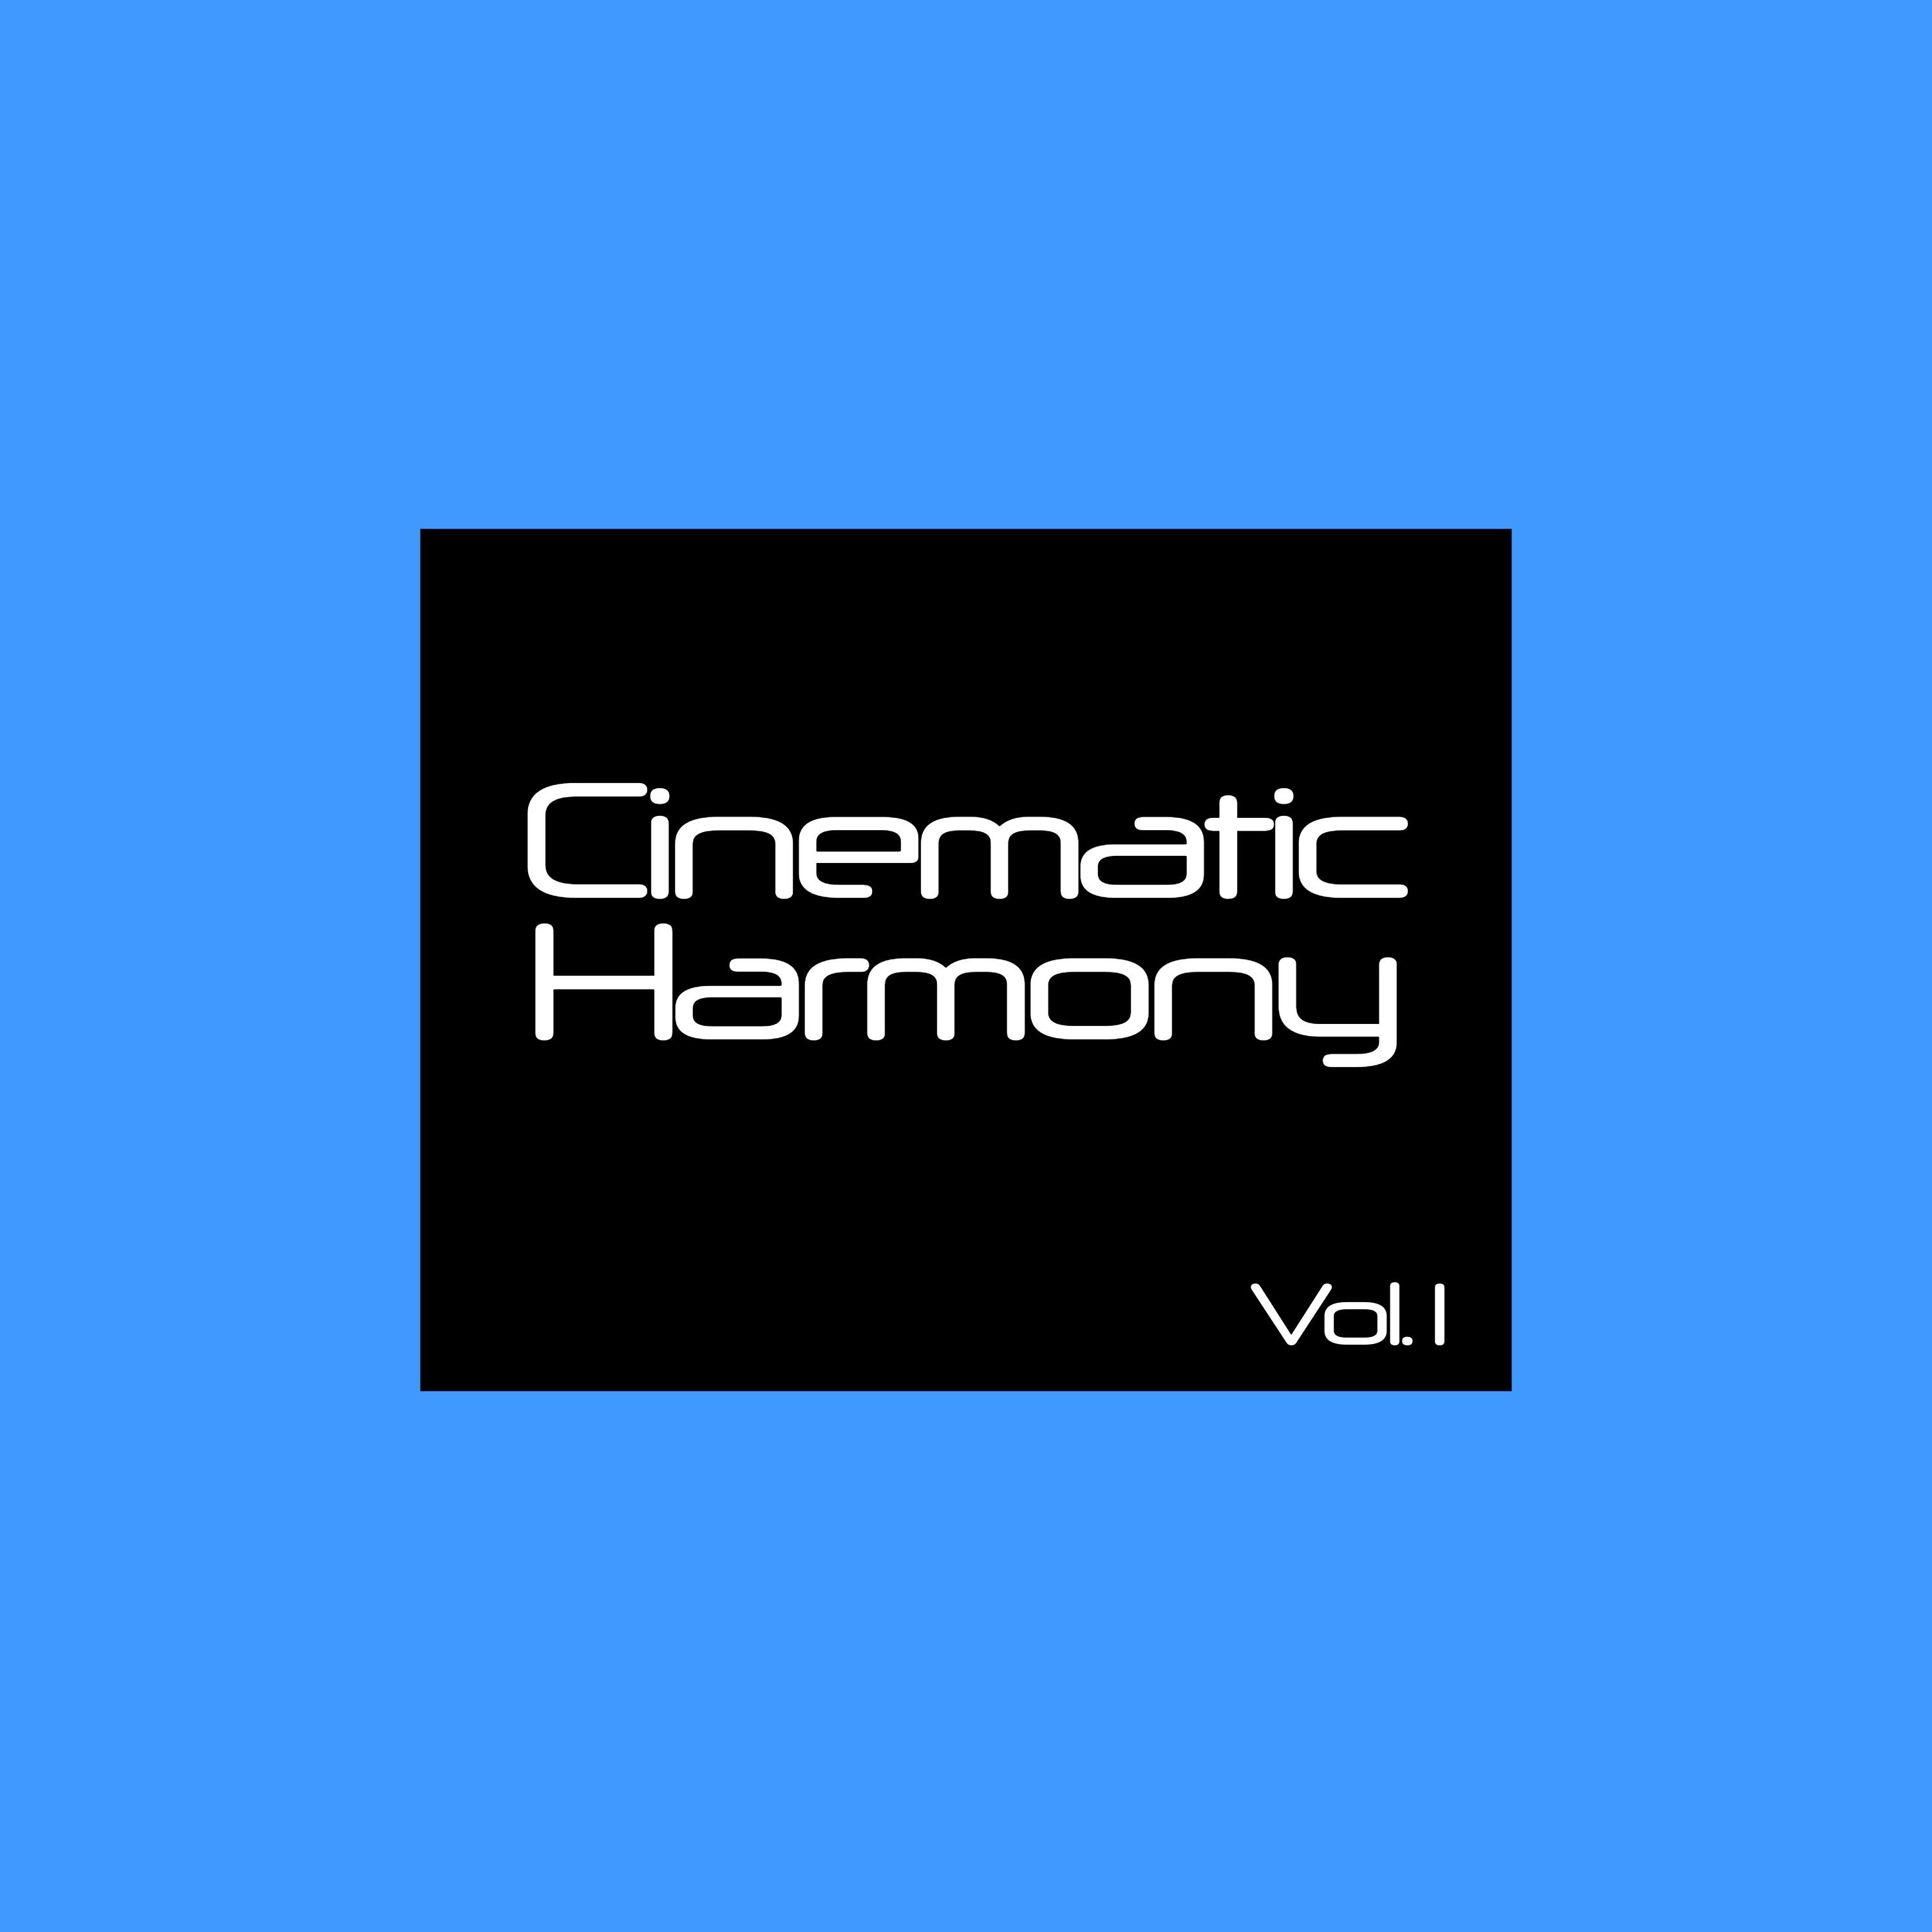 Cinematic Harmony - Forever in Debt